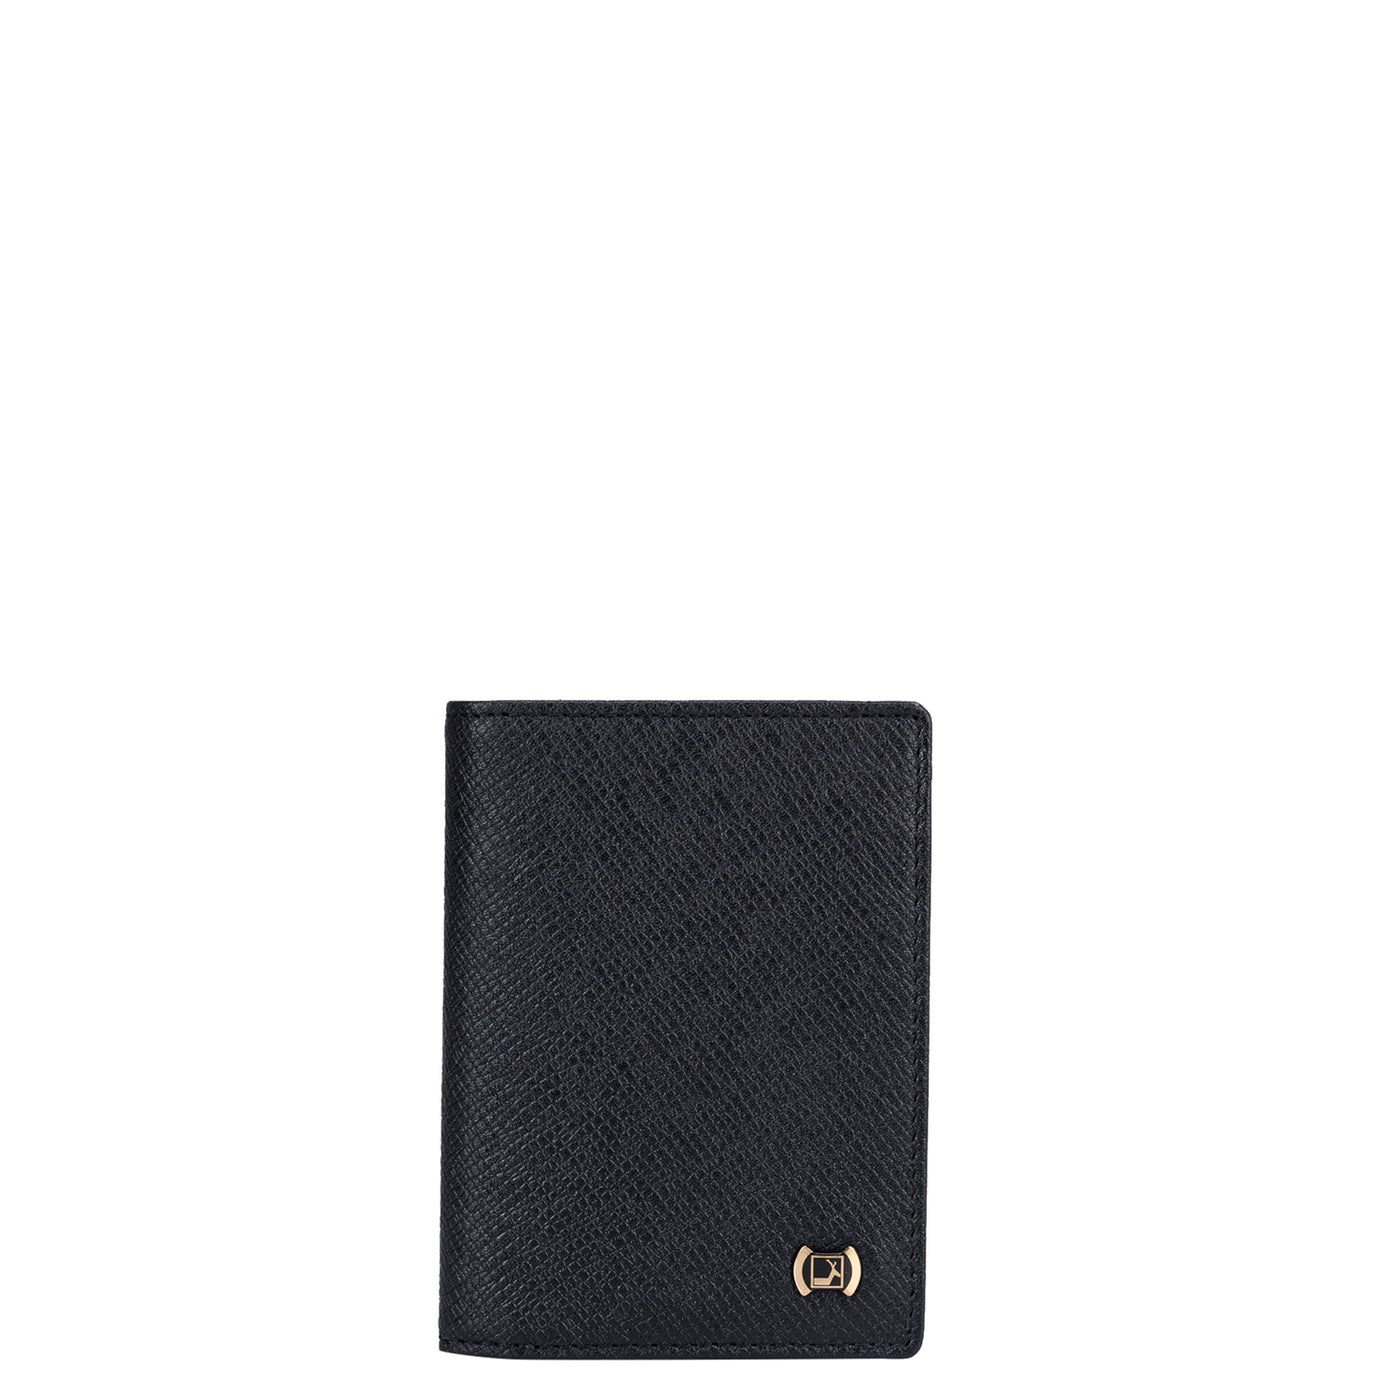 Franzy Leather Card Case - Black